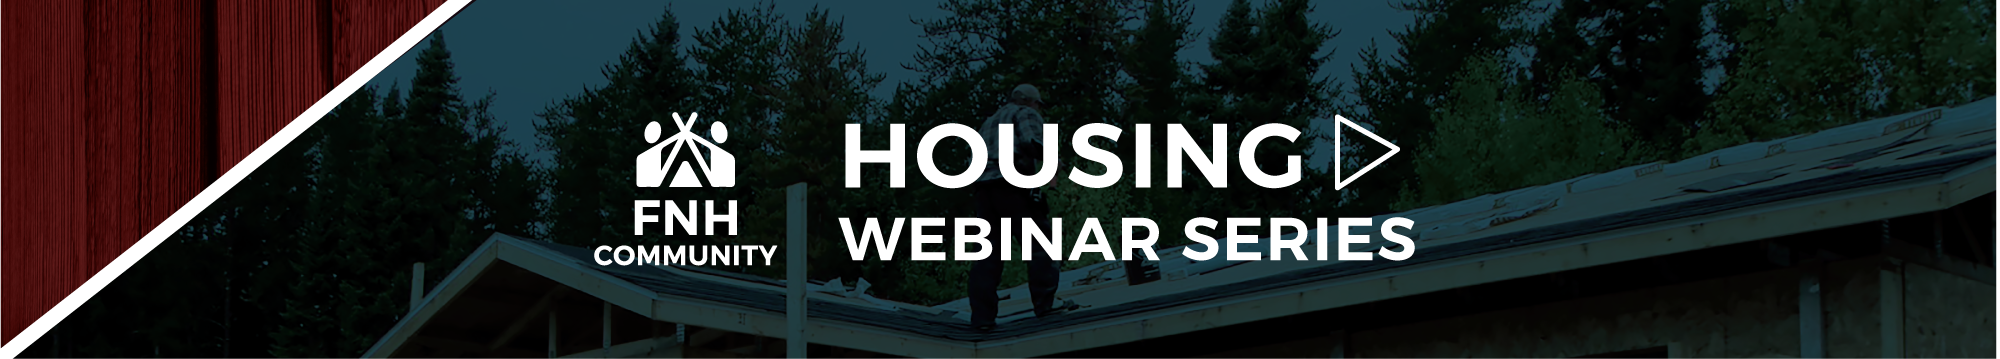 First Nations Housing Community Webinar Series